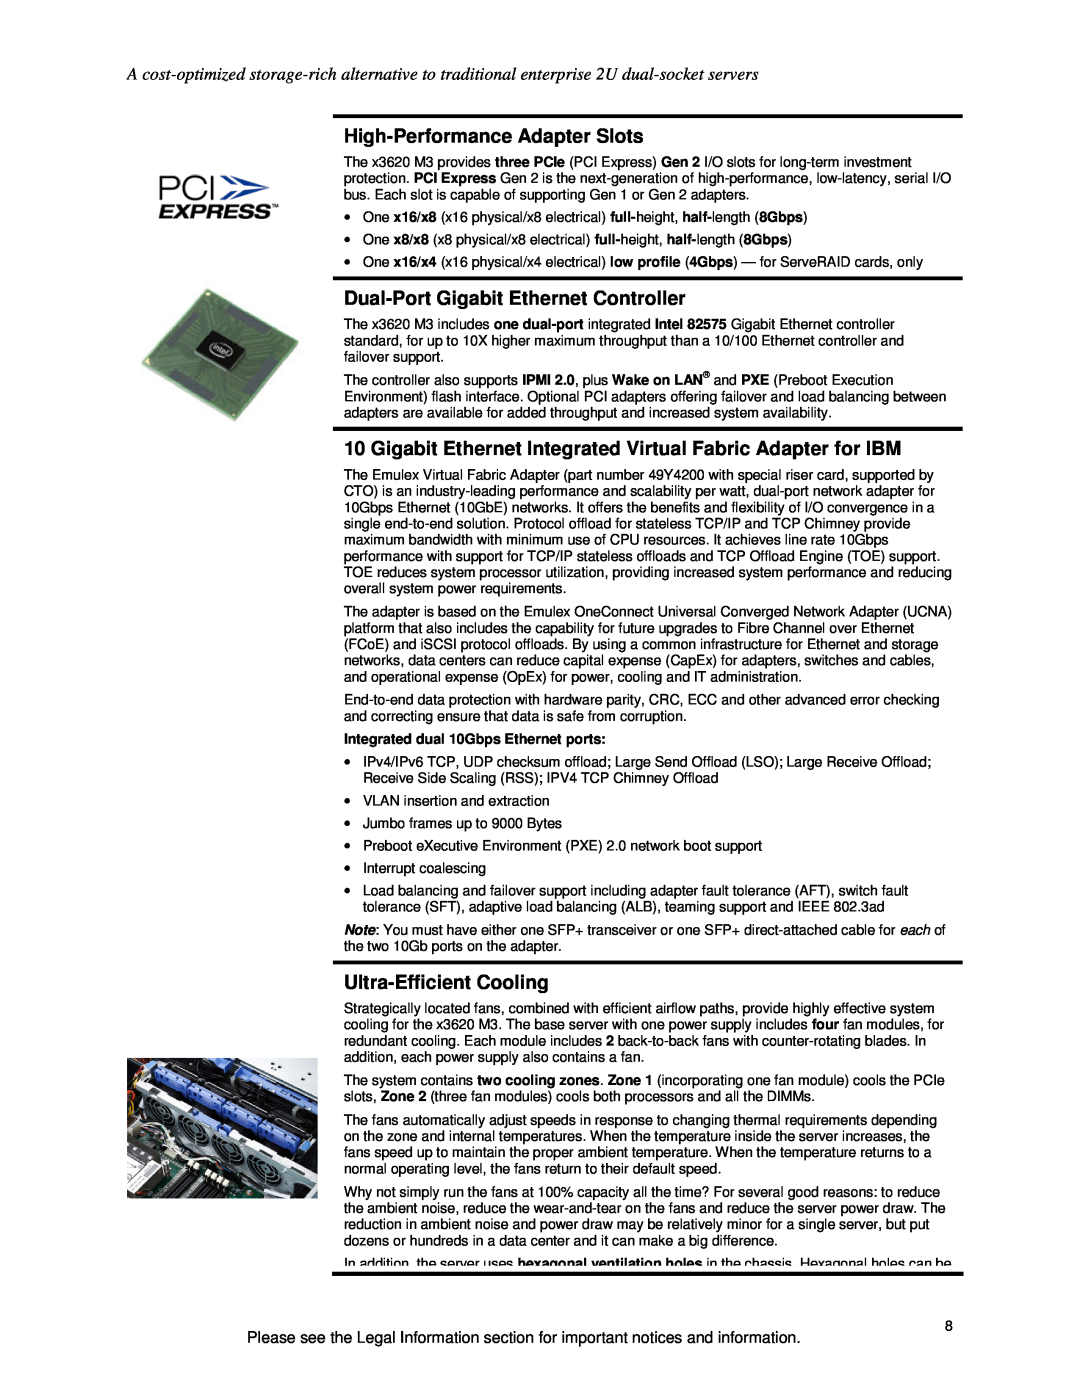 IBM X3620 M3 specifications High-PerformanceAdapter Slots, Dual-PortGigabit Ethernet Controller, Ultra-EfficientCooling 